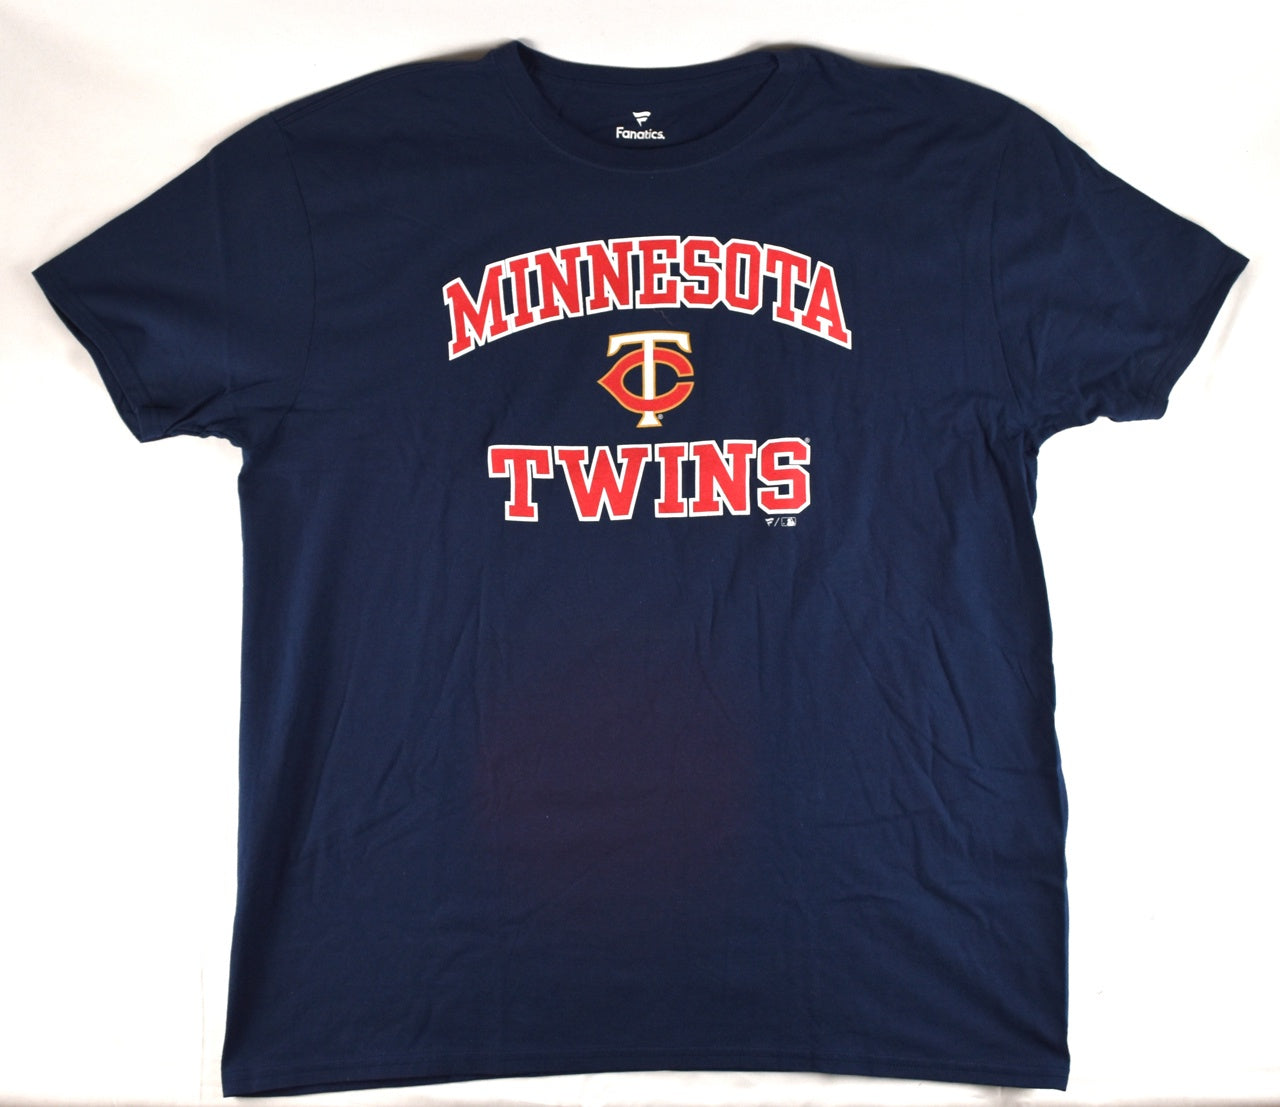 Minnesota Twins Men’s Fanatics Heart And Soul Navy Blue T-Shirt*